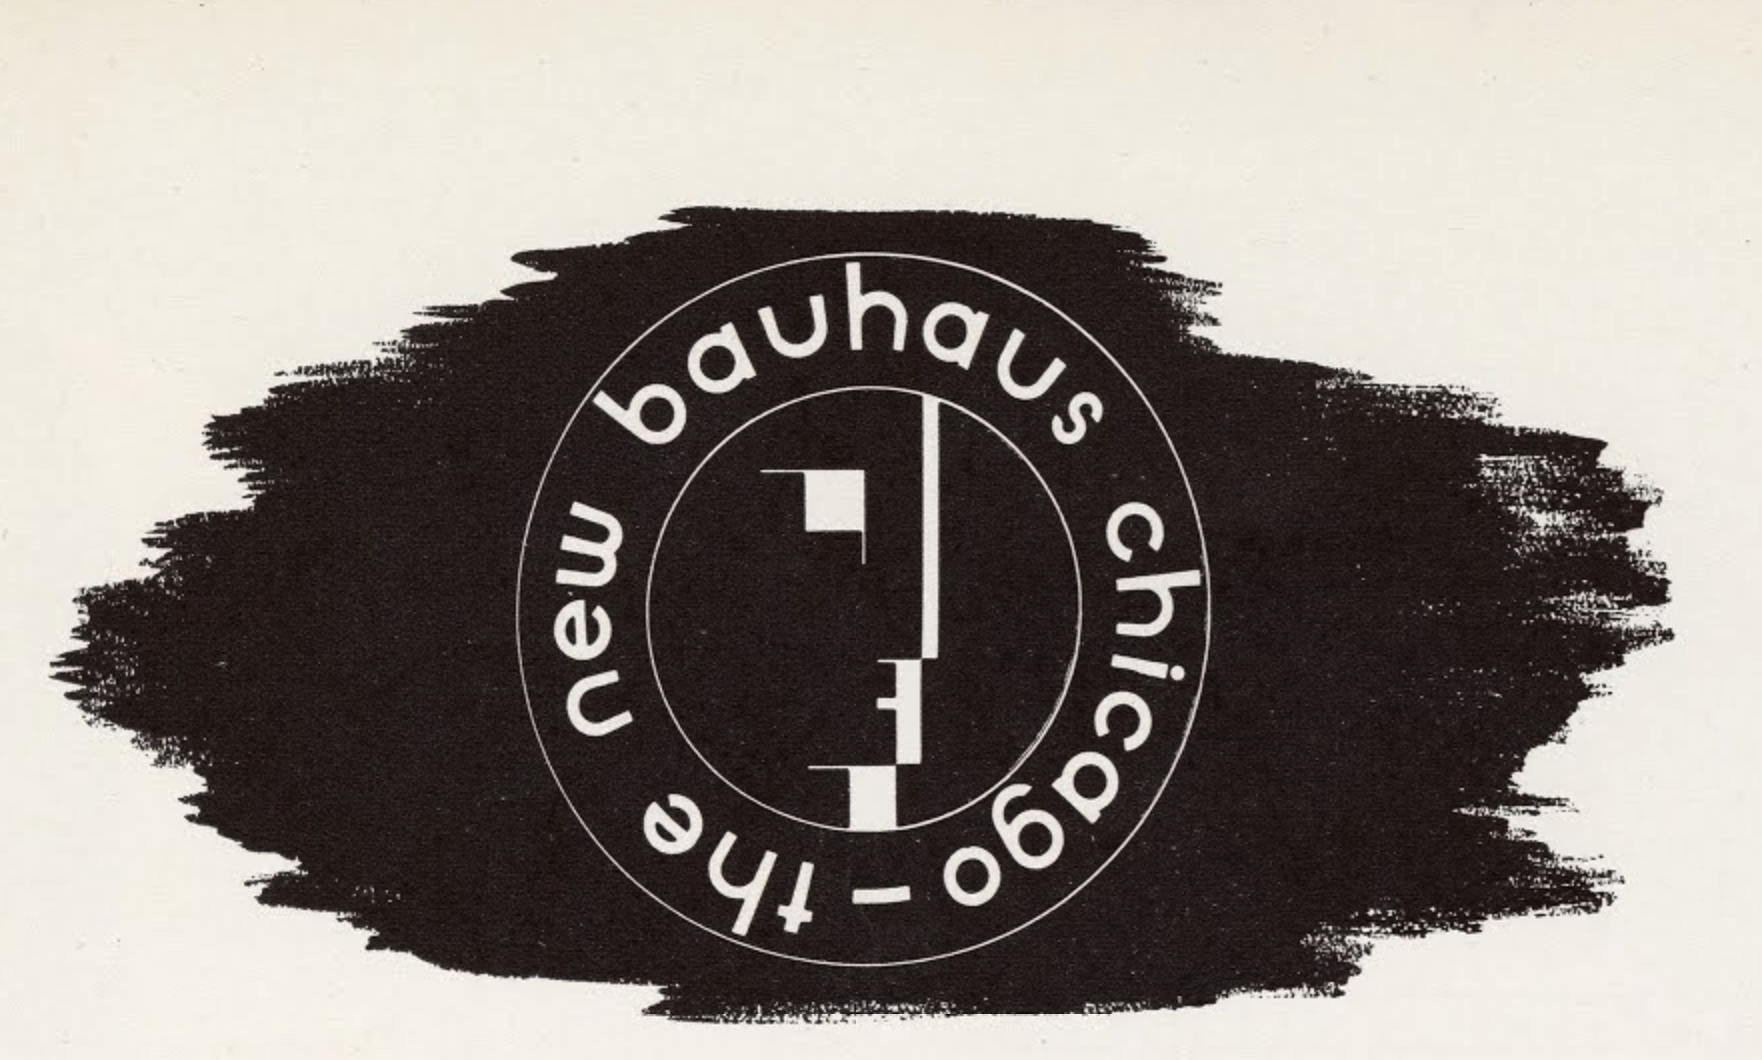 The New Bauhaus logo